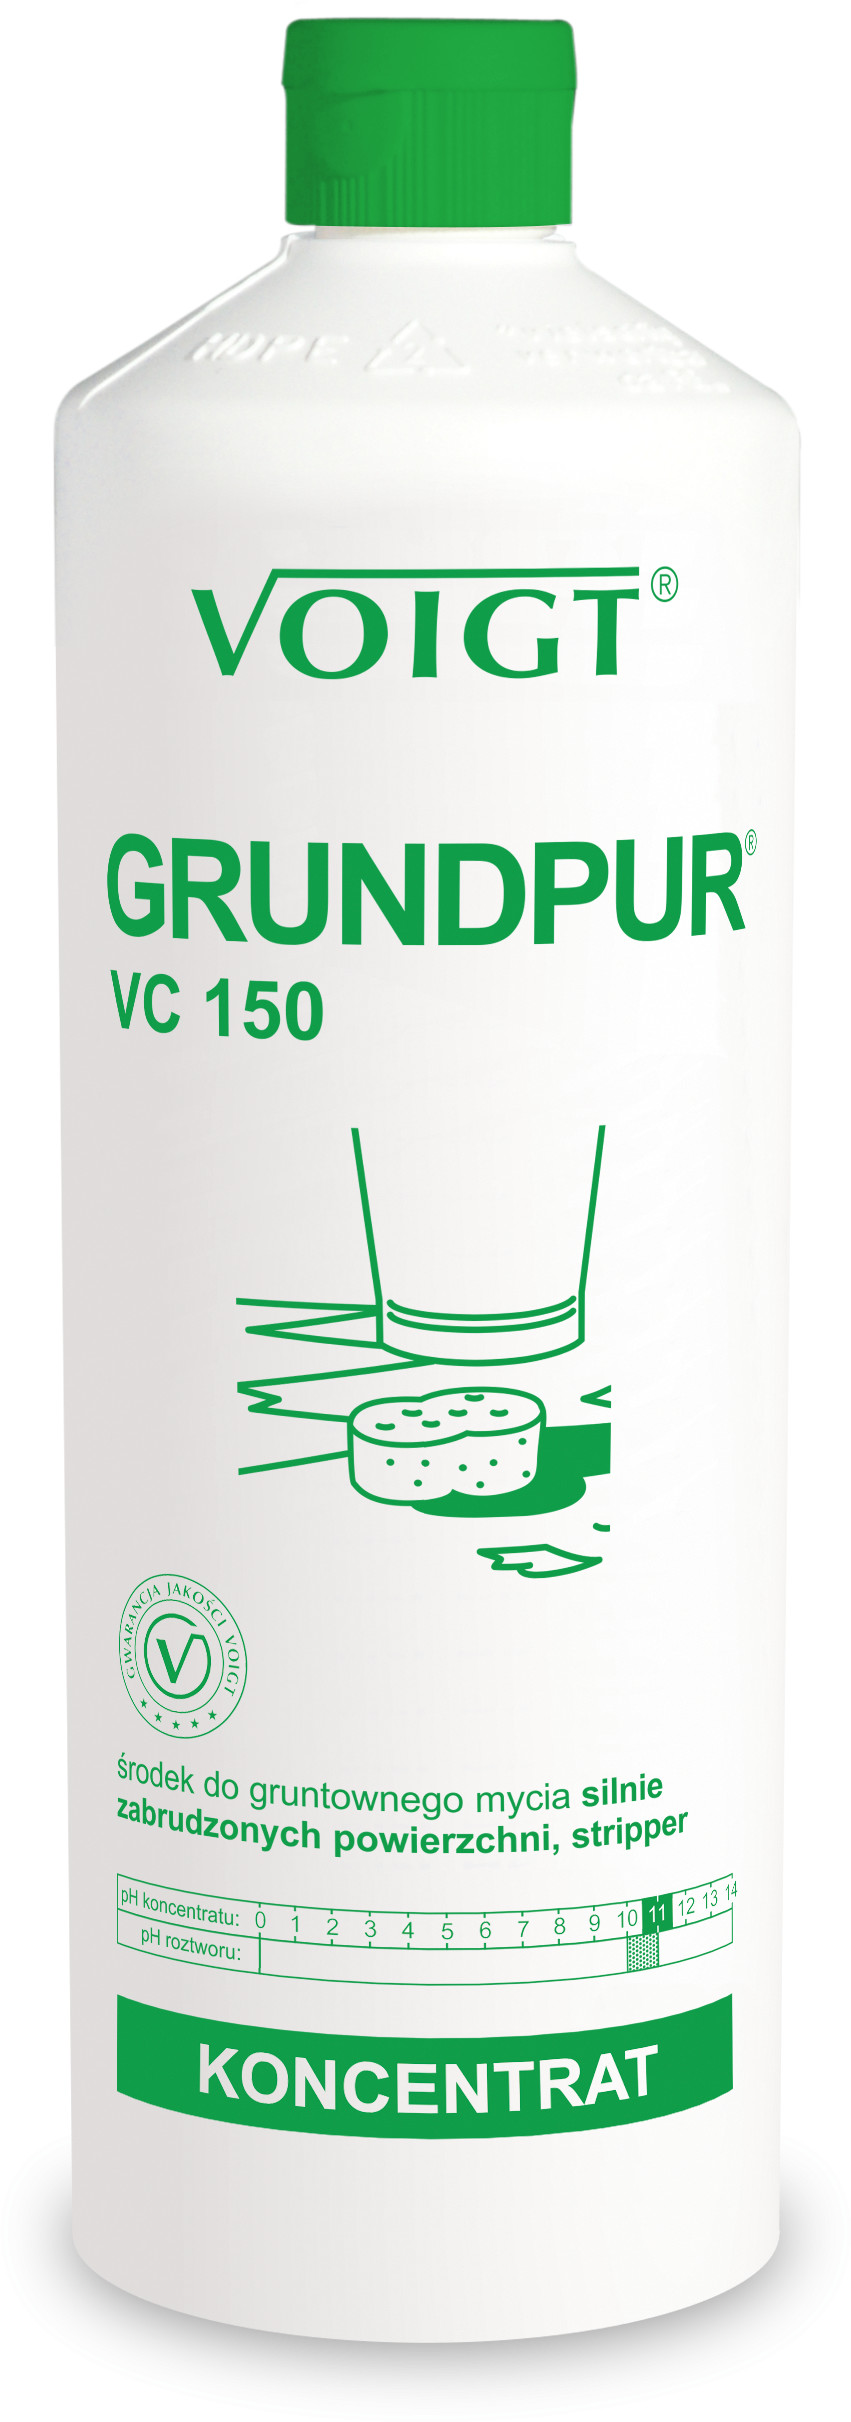 Voigt VC 150 1l. GRUNDPUR Striper do doczyszczania pH 11 VC 150 1l.